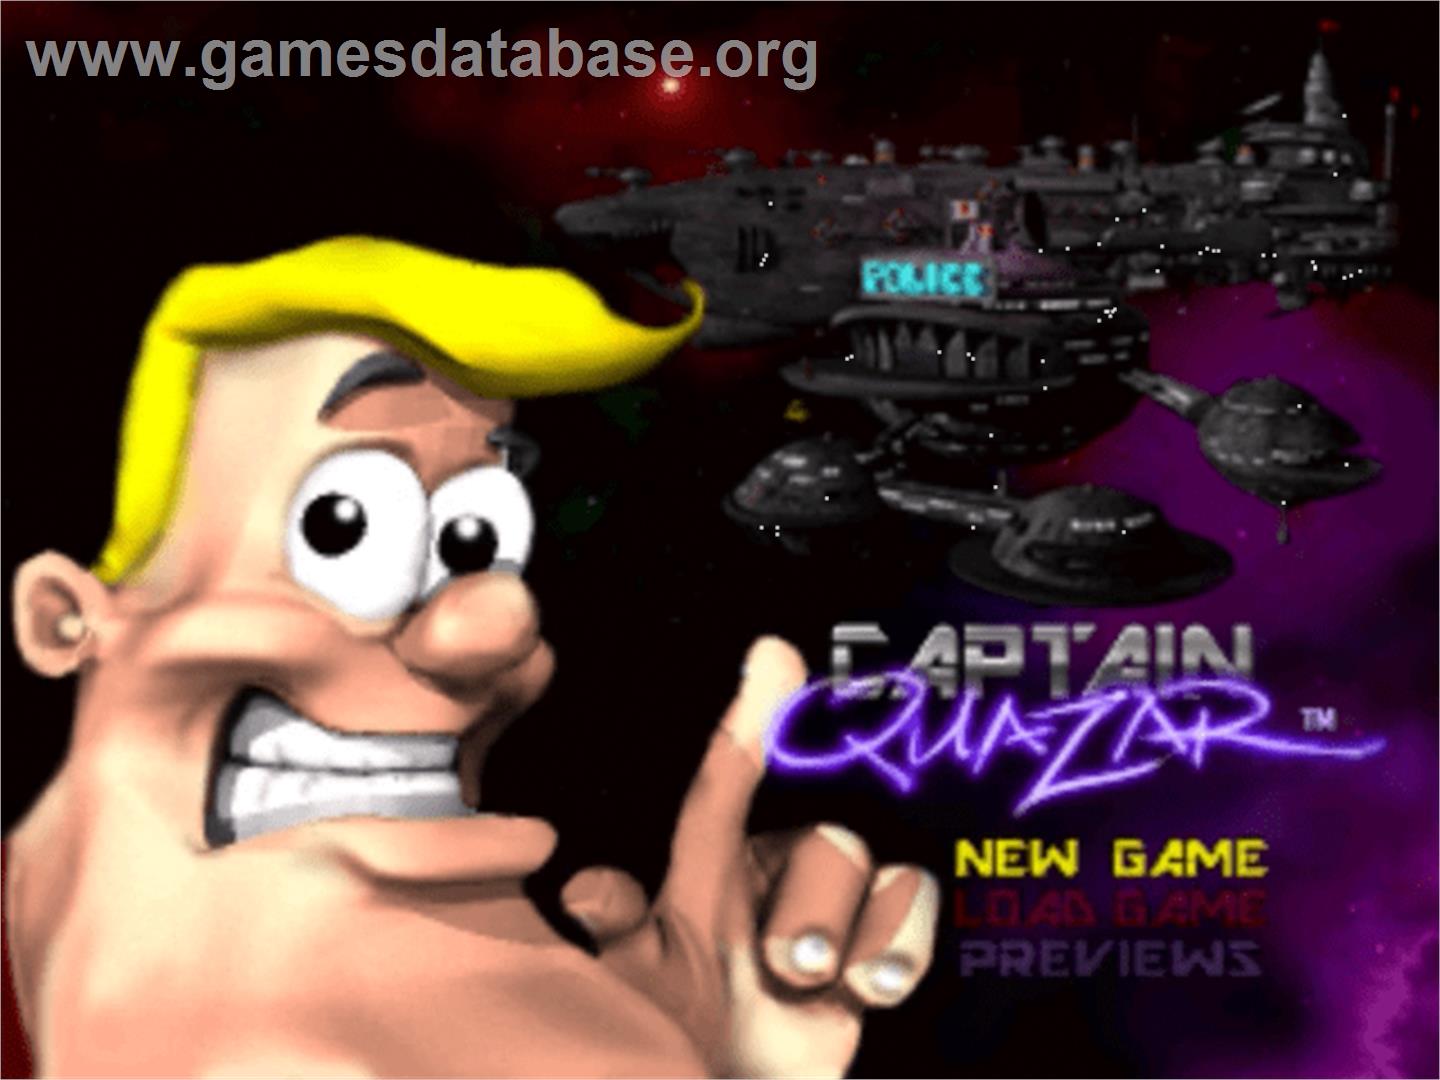 Captain Quazar - Panasonic 3DO - Artwork - Title Screen